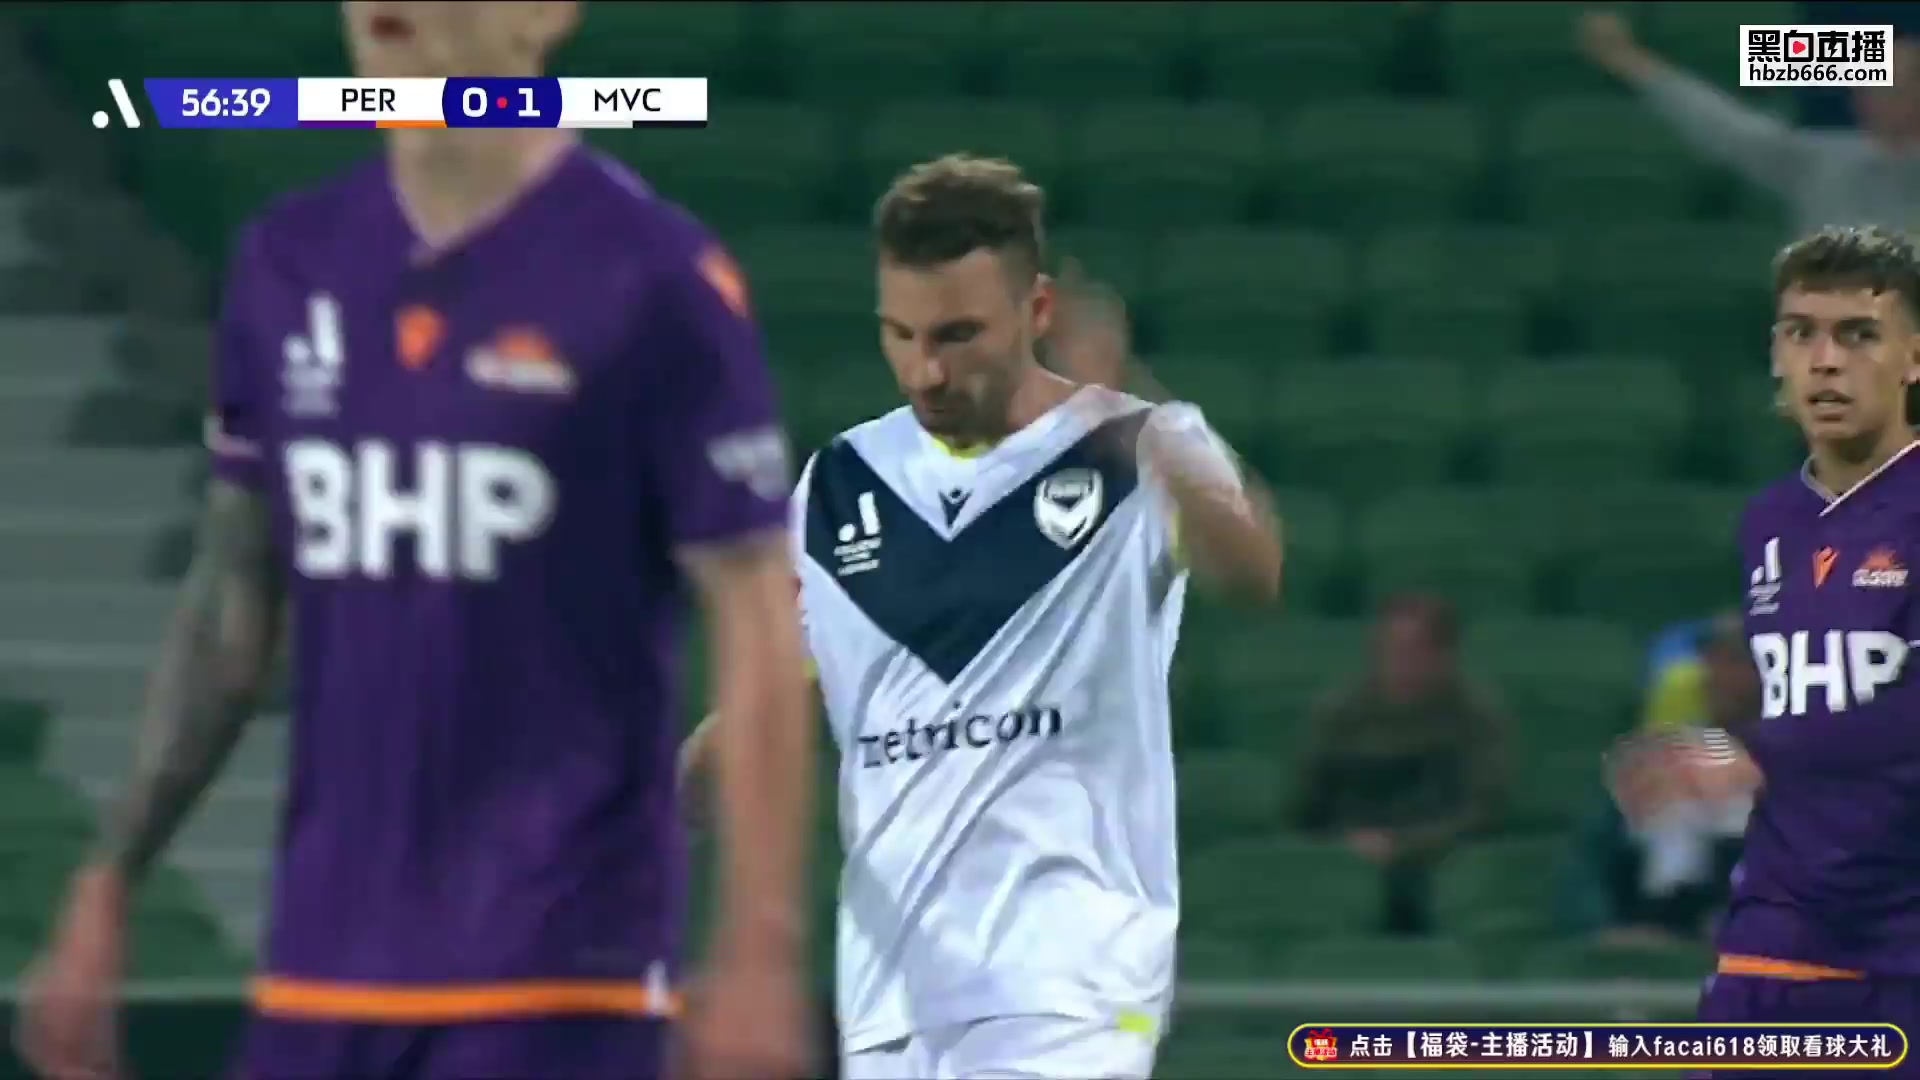 AUS D1 Perth Glory Vs Melbourne Victory Francesco Margiotta Goal in 56 min, Score 0:1